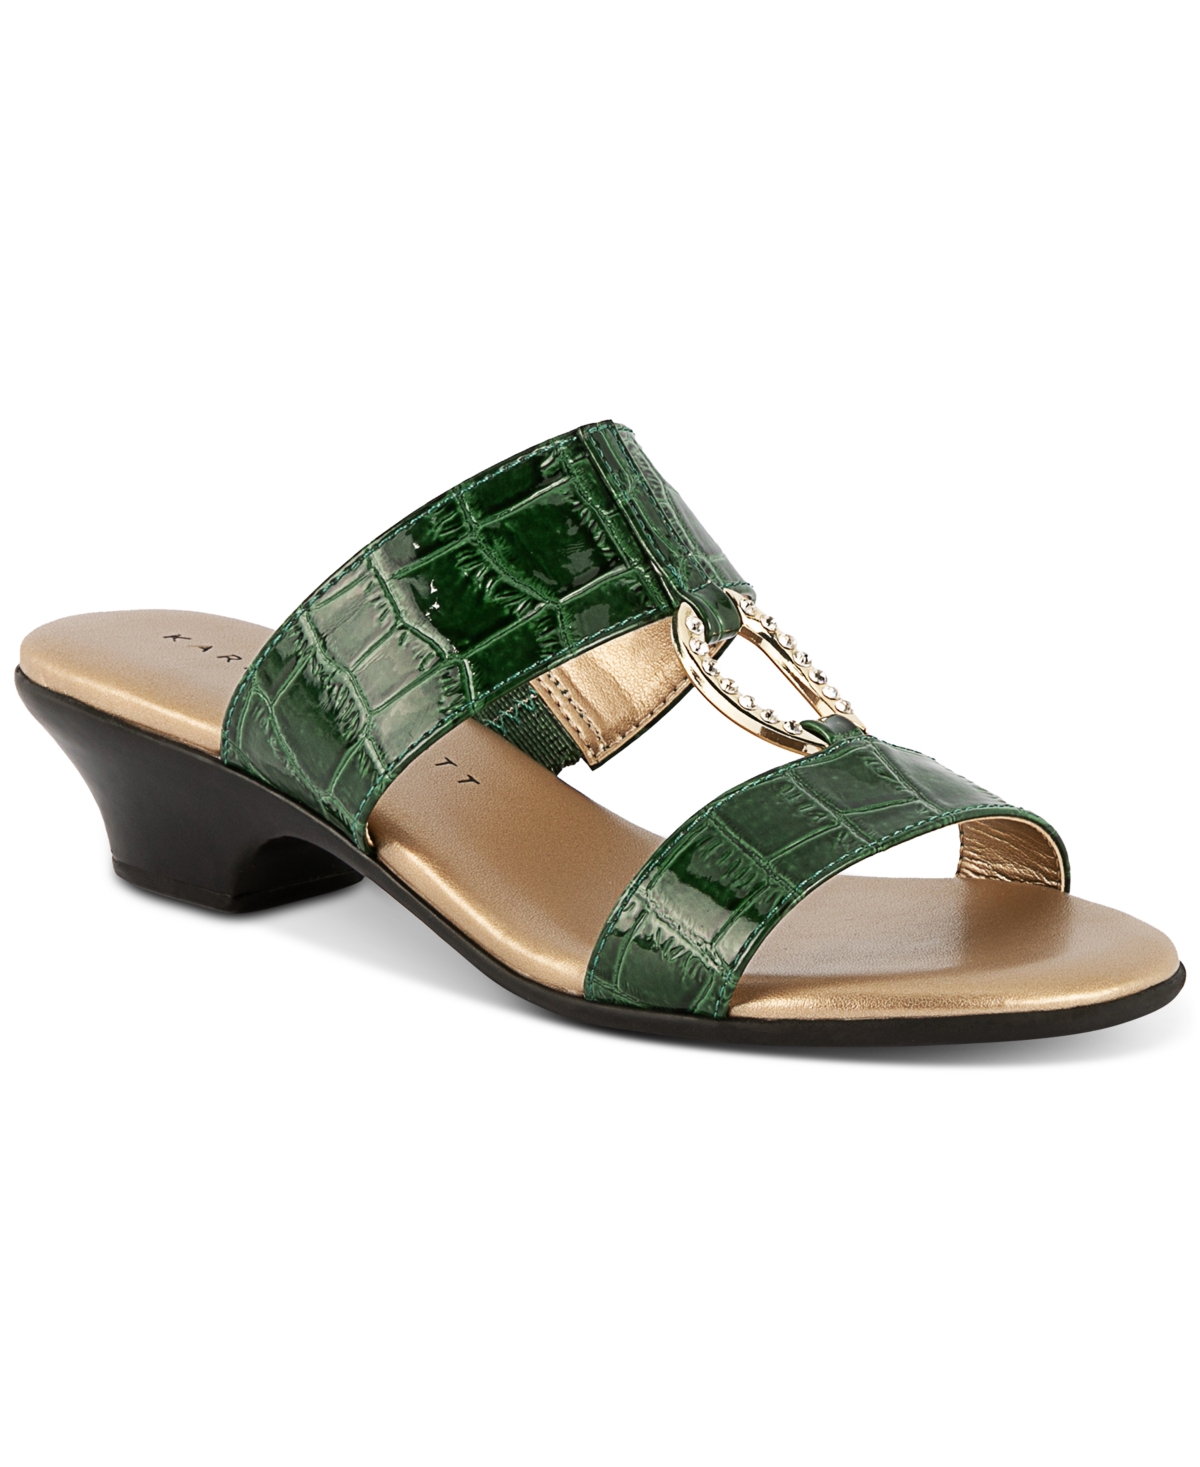 Karen Scott Eanna Sandals, Created For Macy's In Green Croc